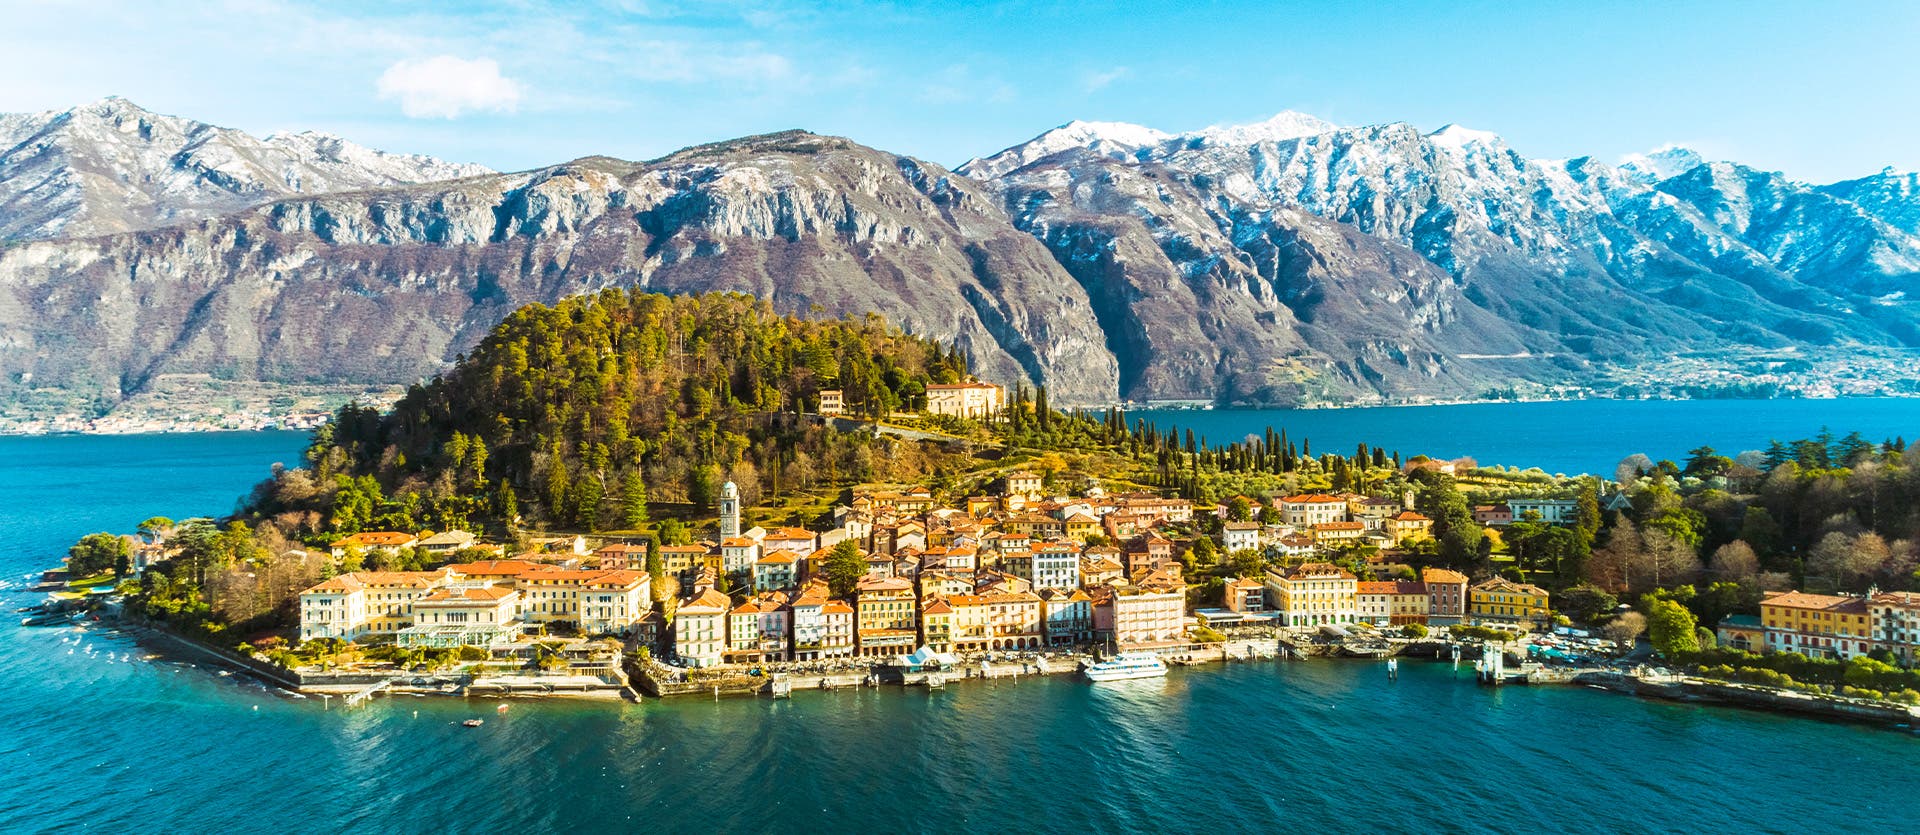 Sehenswertes in Italien Lake Como